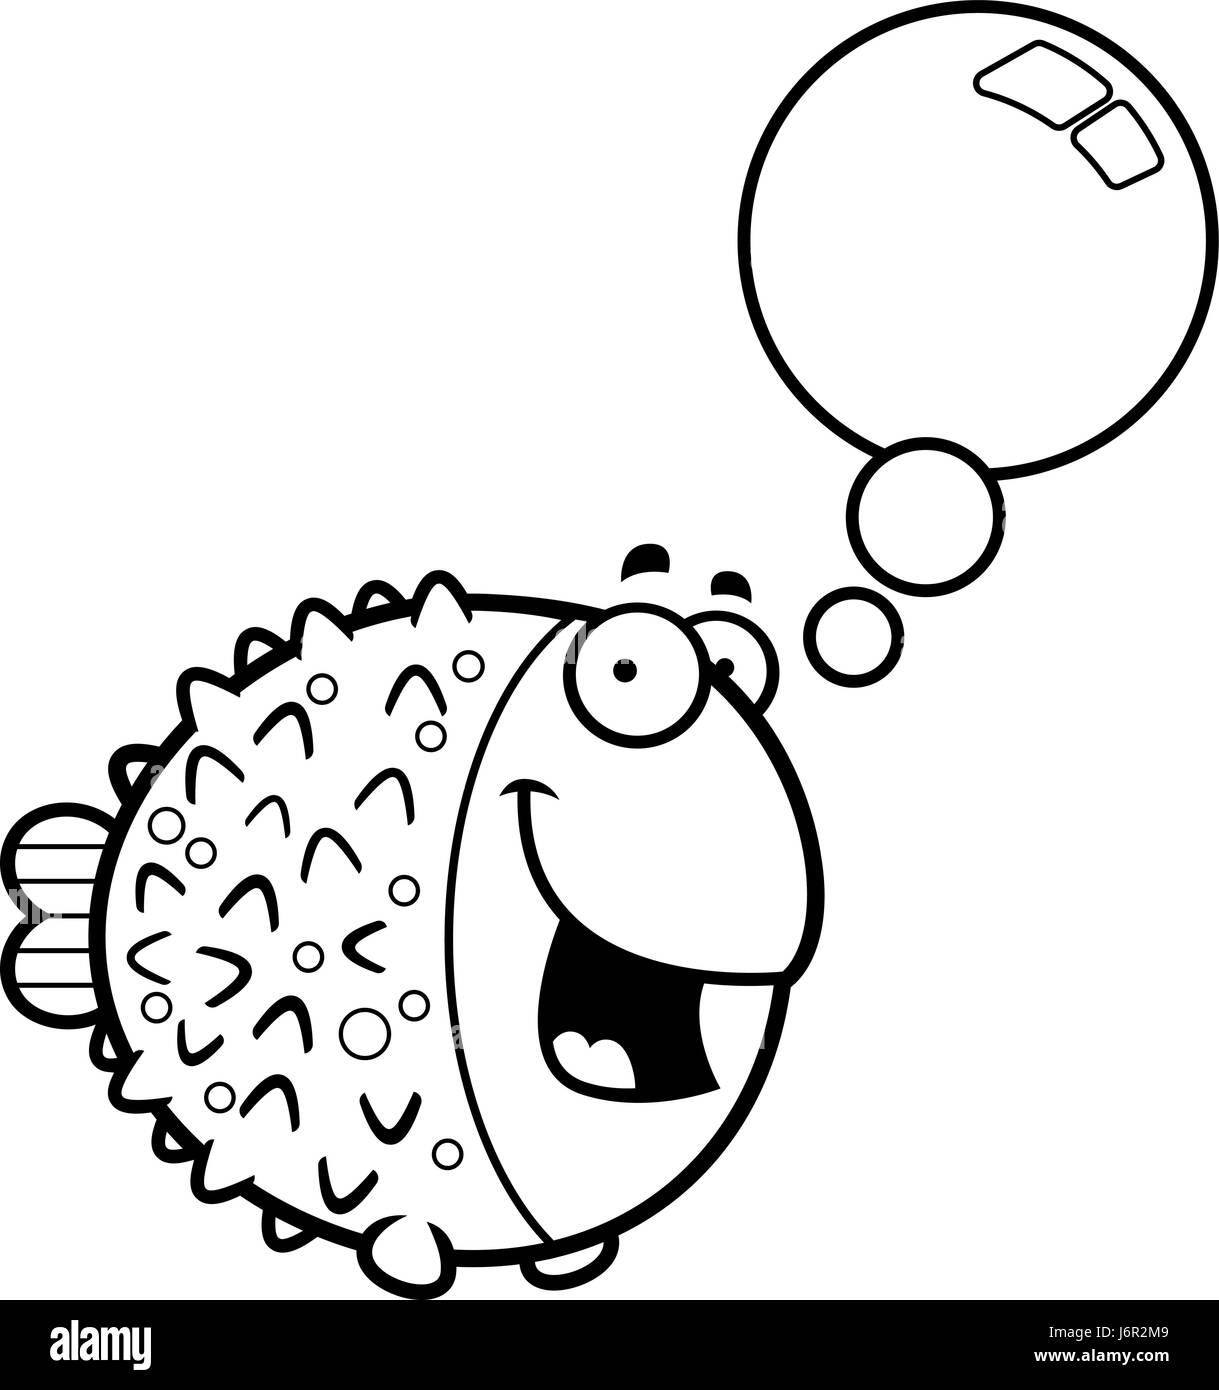 A cartoon illustration of a pufferfish talking. Stock Vector